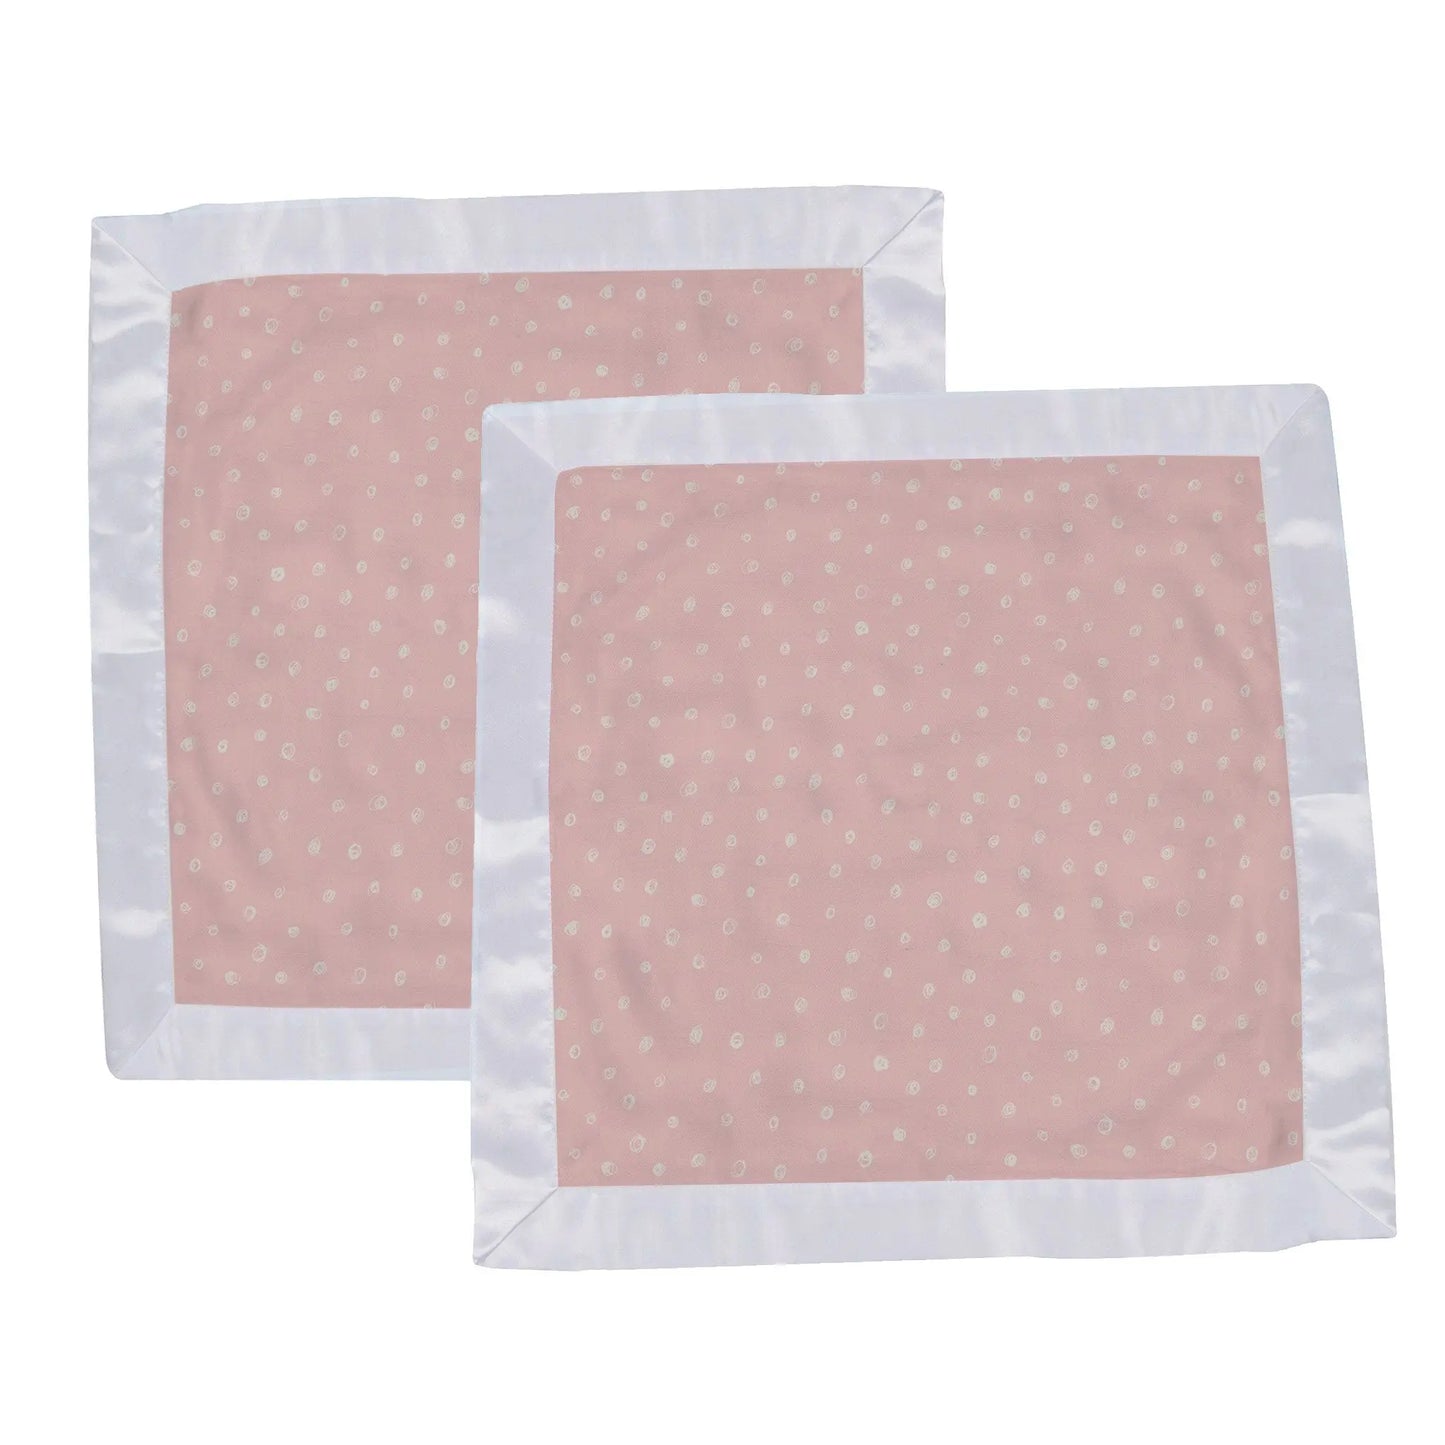 Security Blanket 2PK | Bamboo Fabric - Polka Dot Pink Newcastle Classics